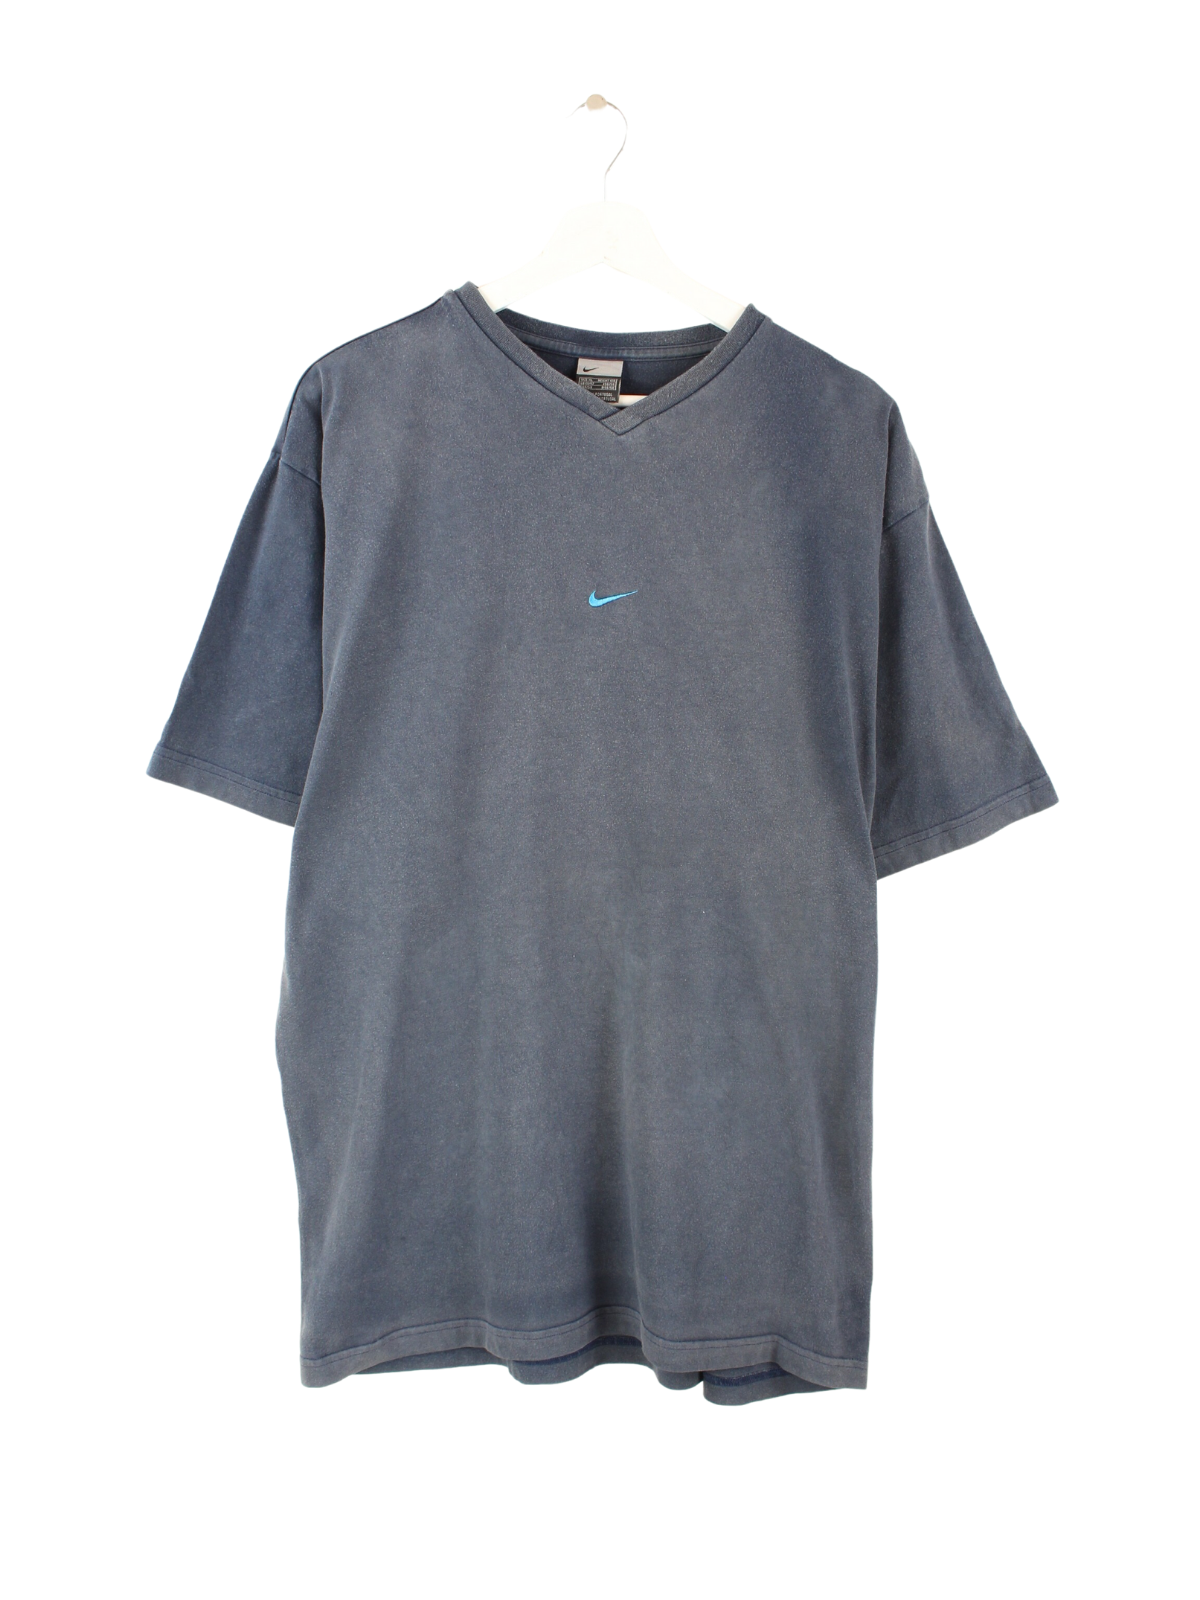 Nike Center Swoosh T-Shirt Blue XL